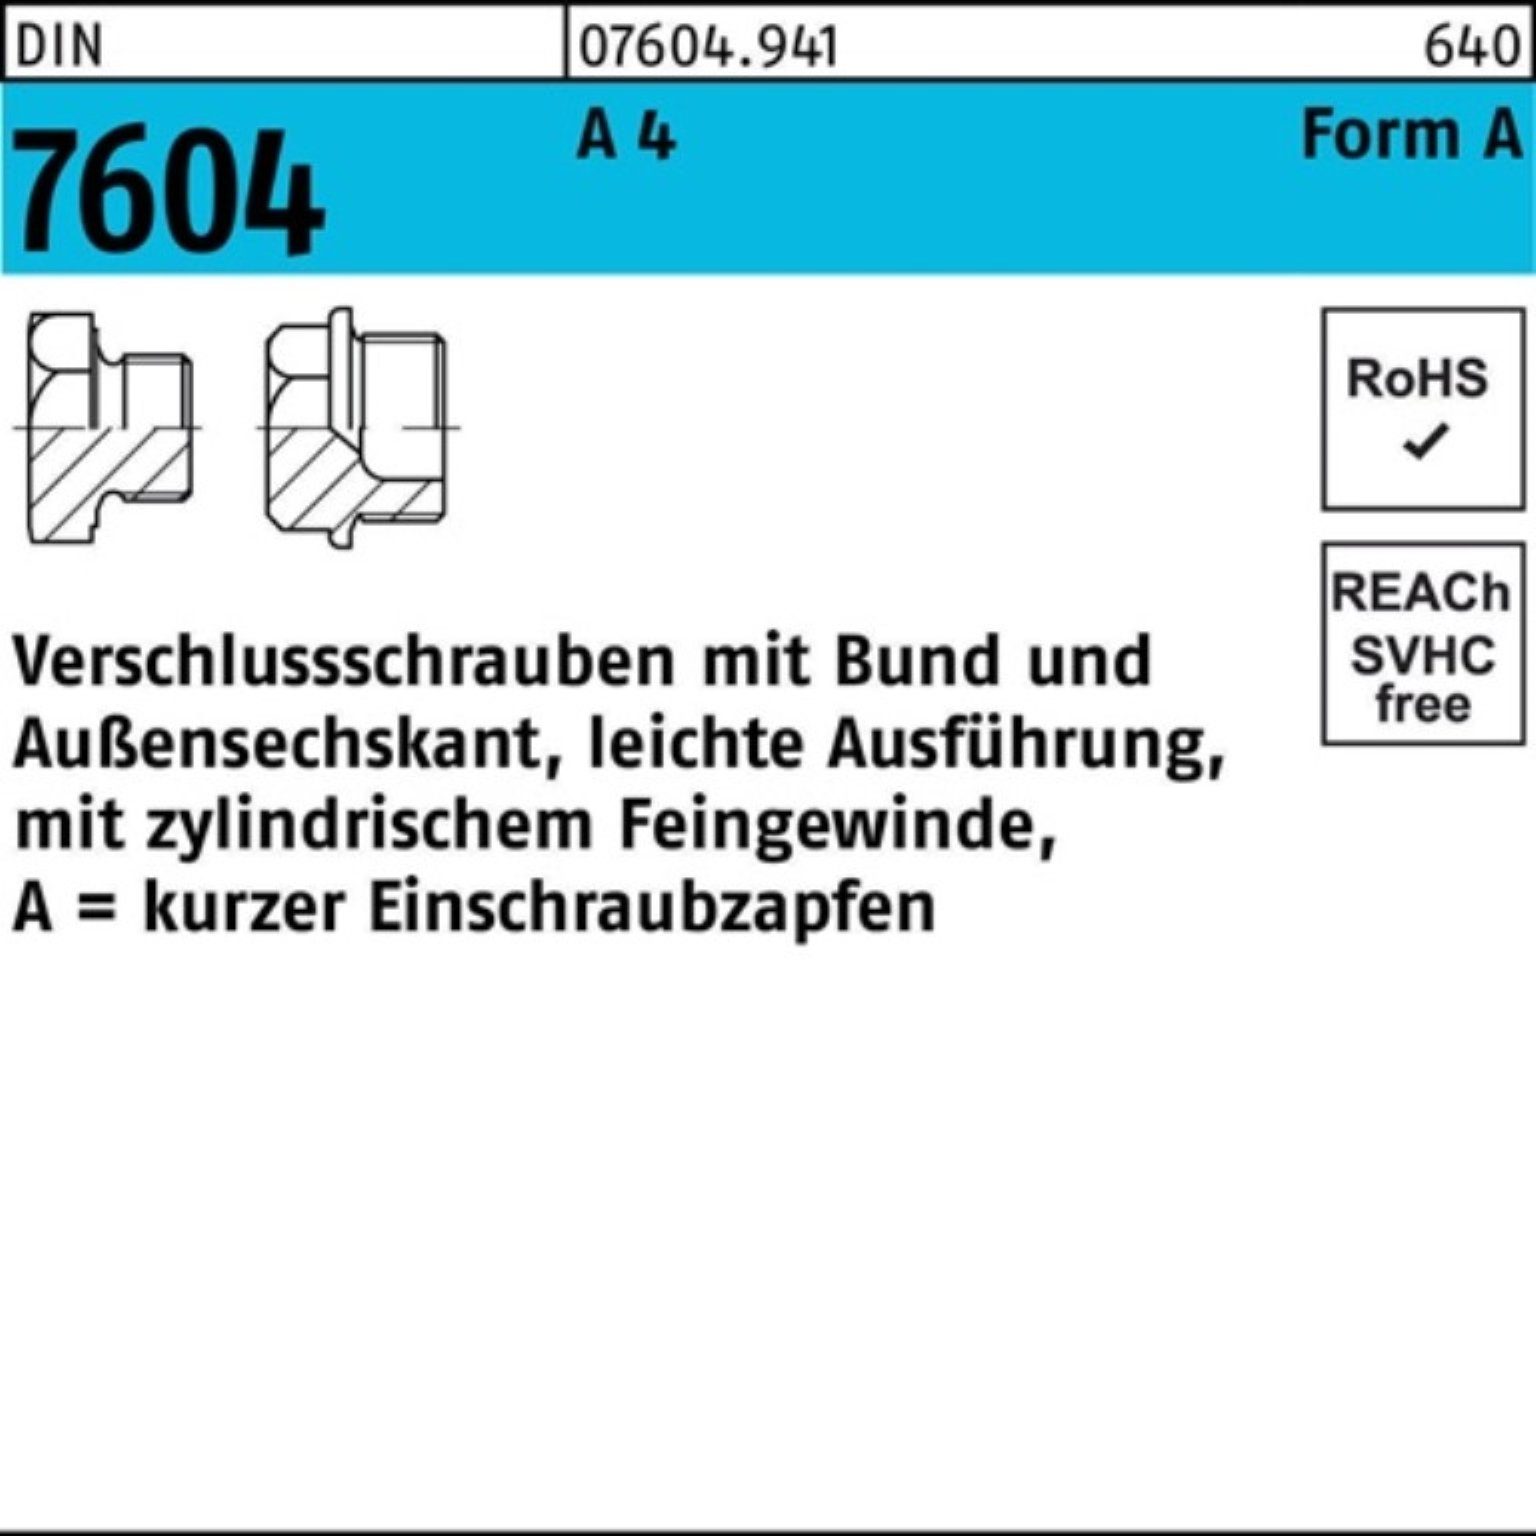 Reyher Schraube 100er Pack Verschlußschraube DIN 7604 Bund AM 16x 1,5 A 4 1 Stück DI